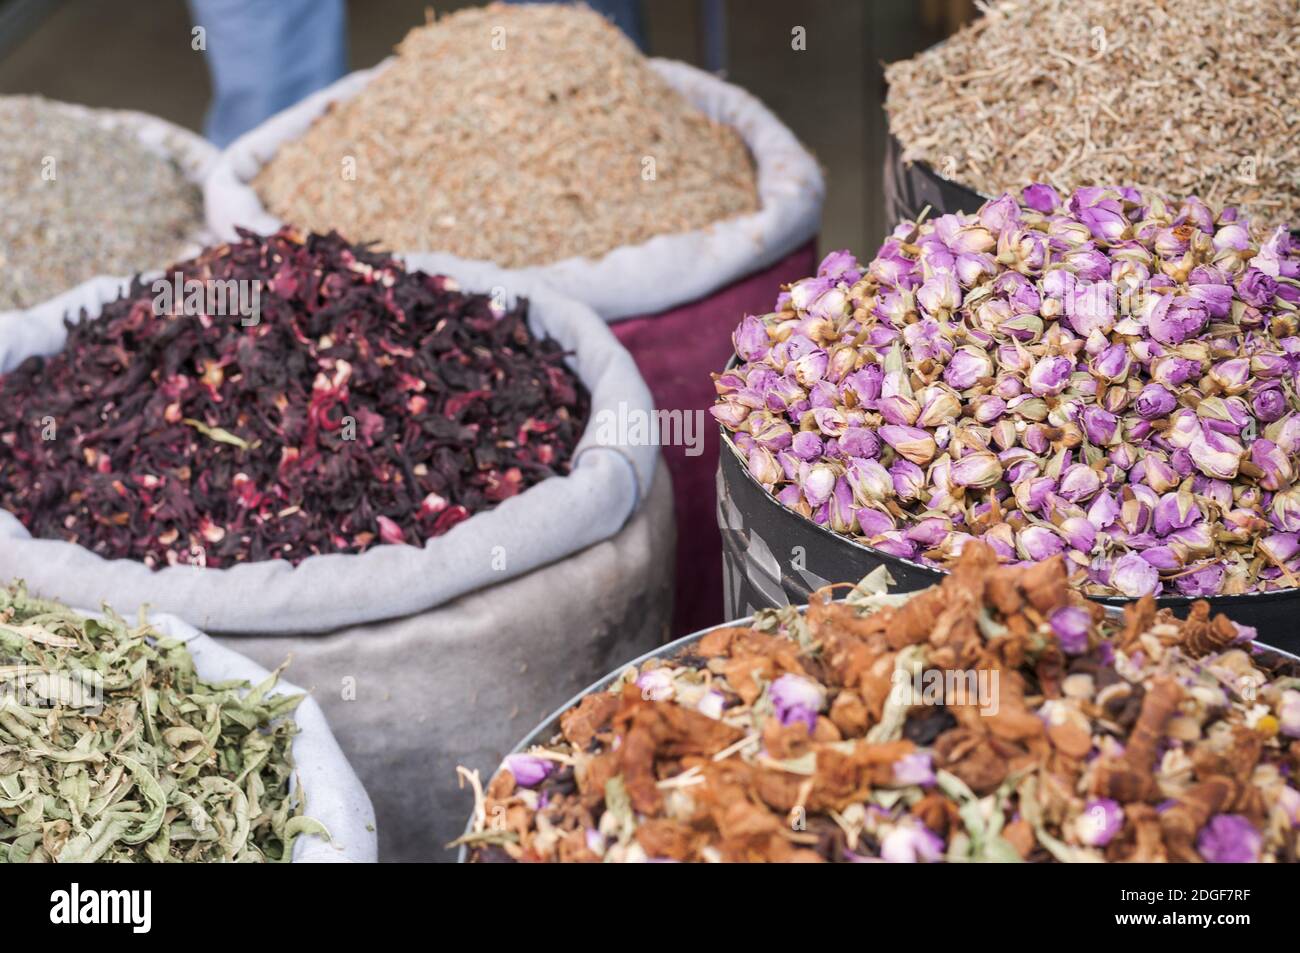 Market stall with sacks full of herbal tea. Stock Photo